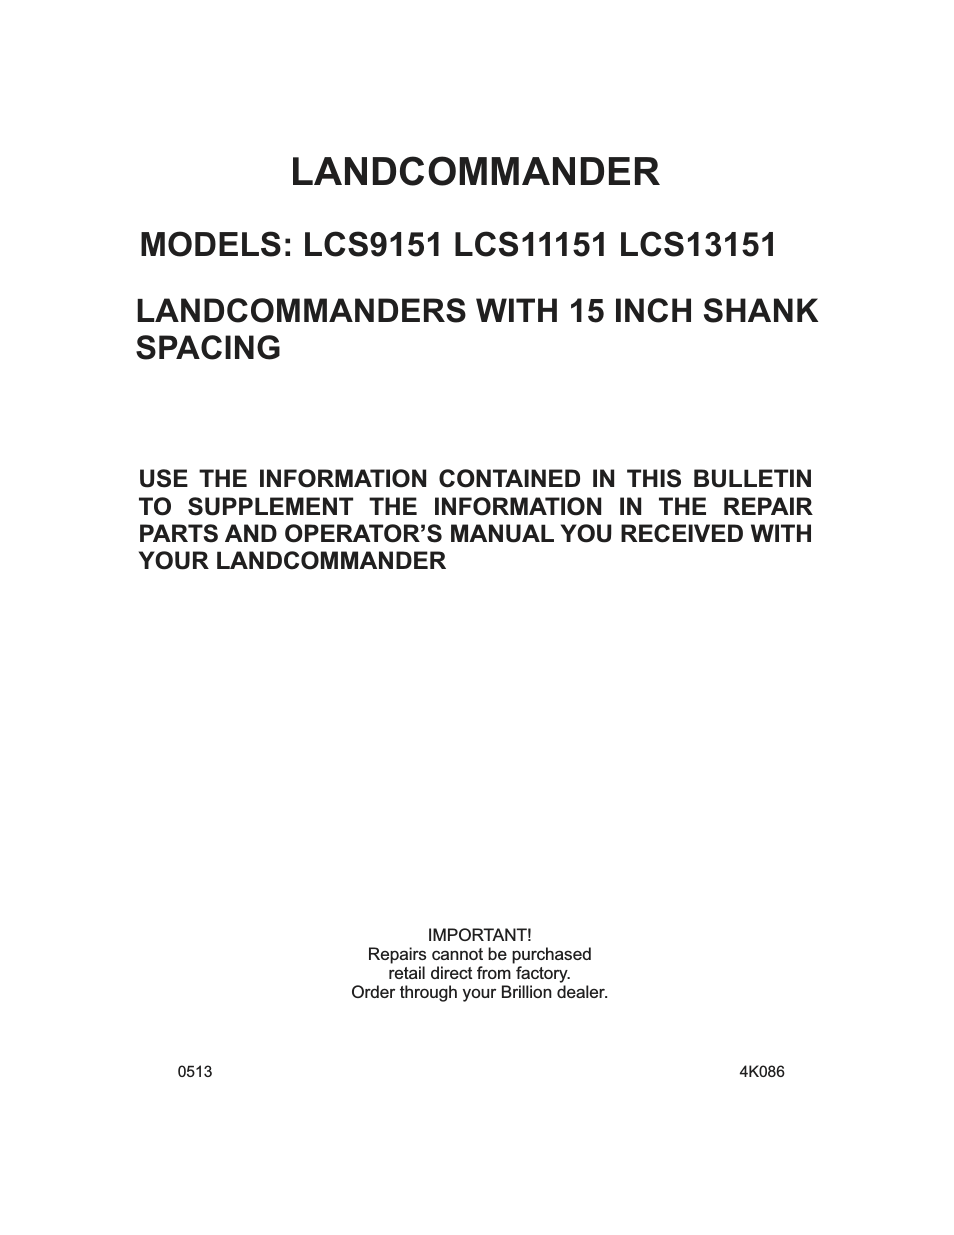 LCS11151 LANDCOMMANDER